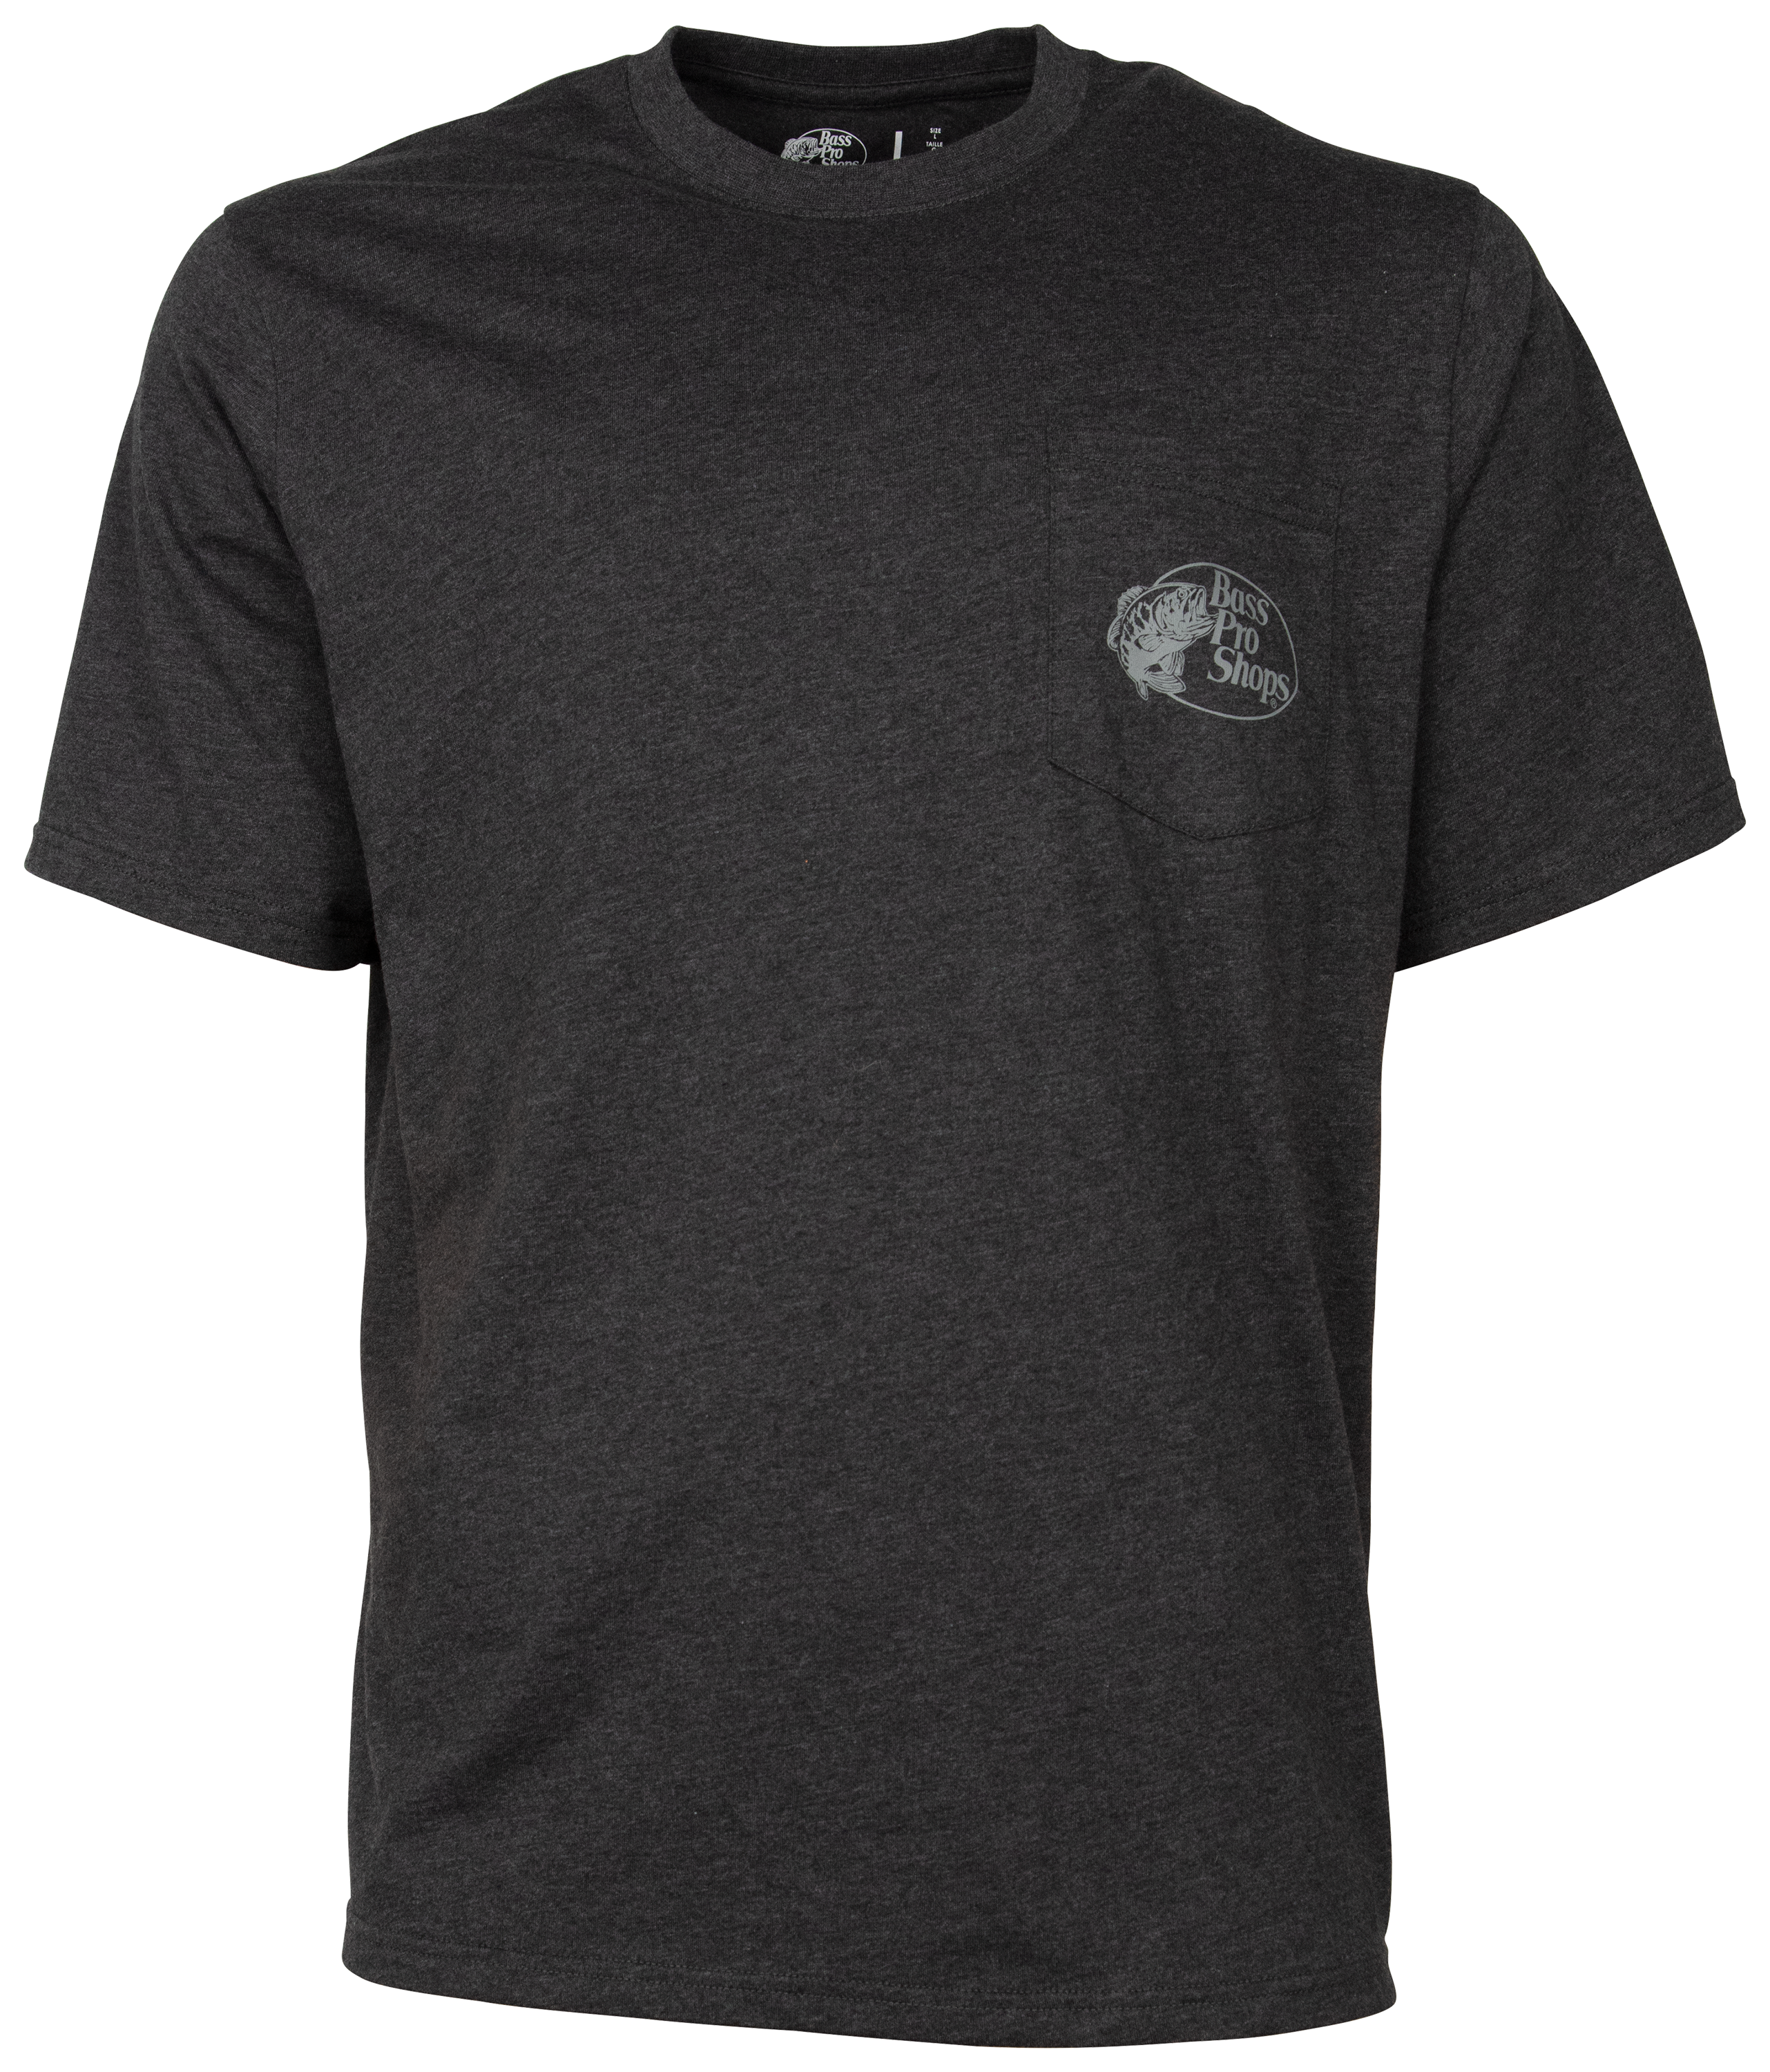 Bass Pro Shops Americana Duck Graphic Short-Sleeve T-Shirt for Men